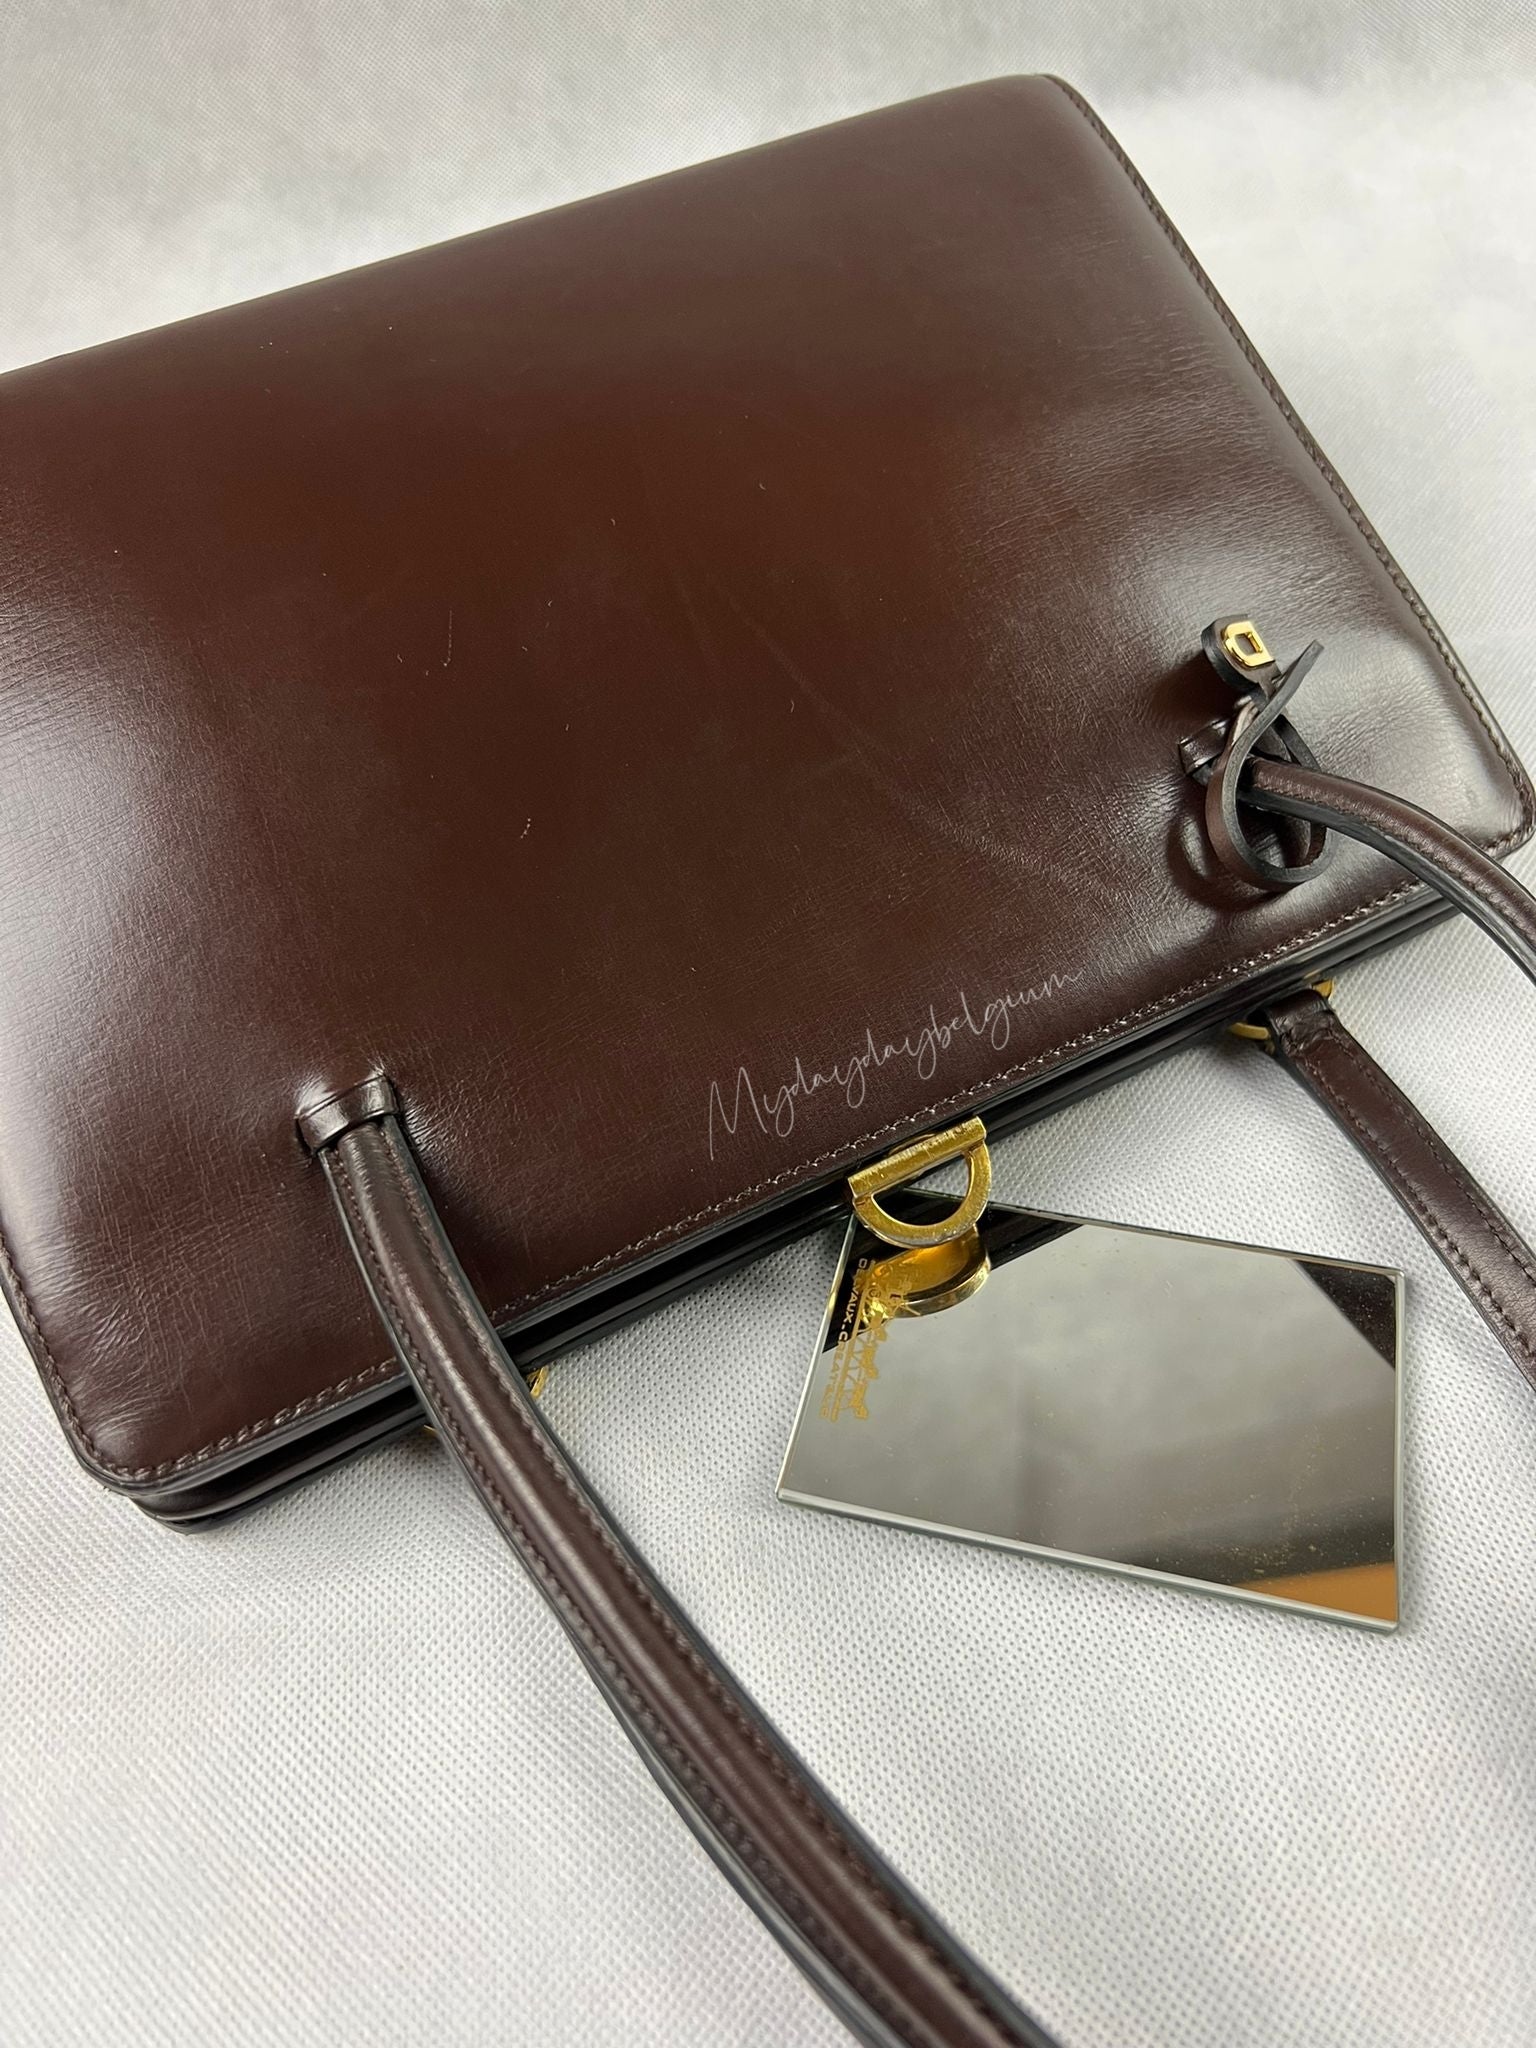 Delvaux Leather-Trimmed Canvas Bag - Brown Shoulder Bags, Handbags